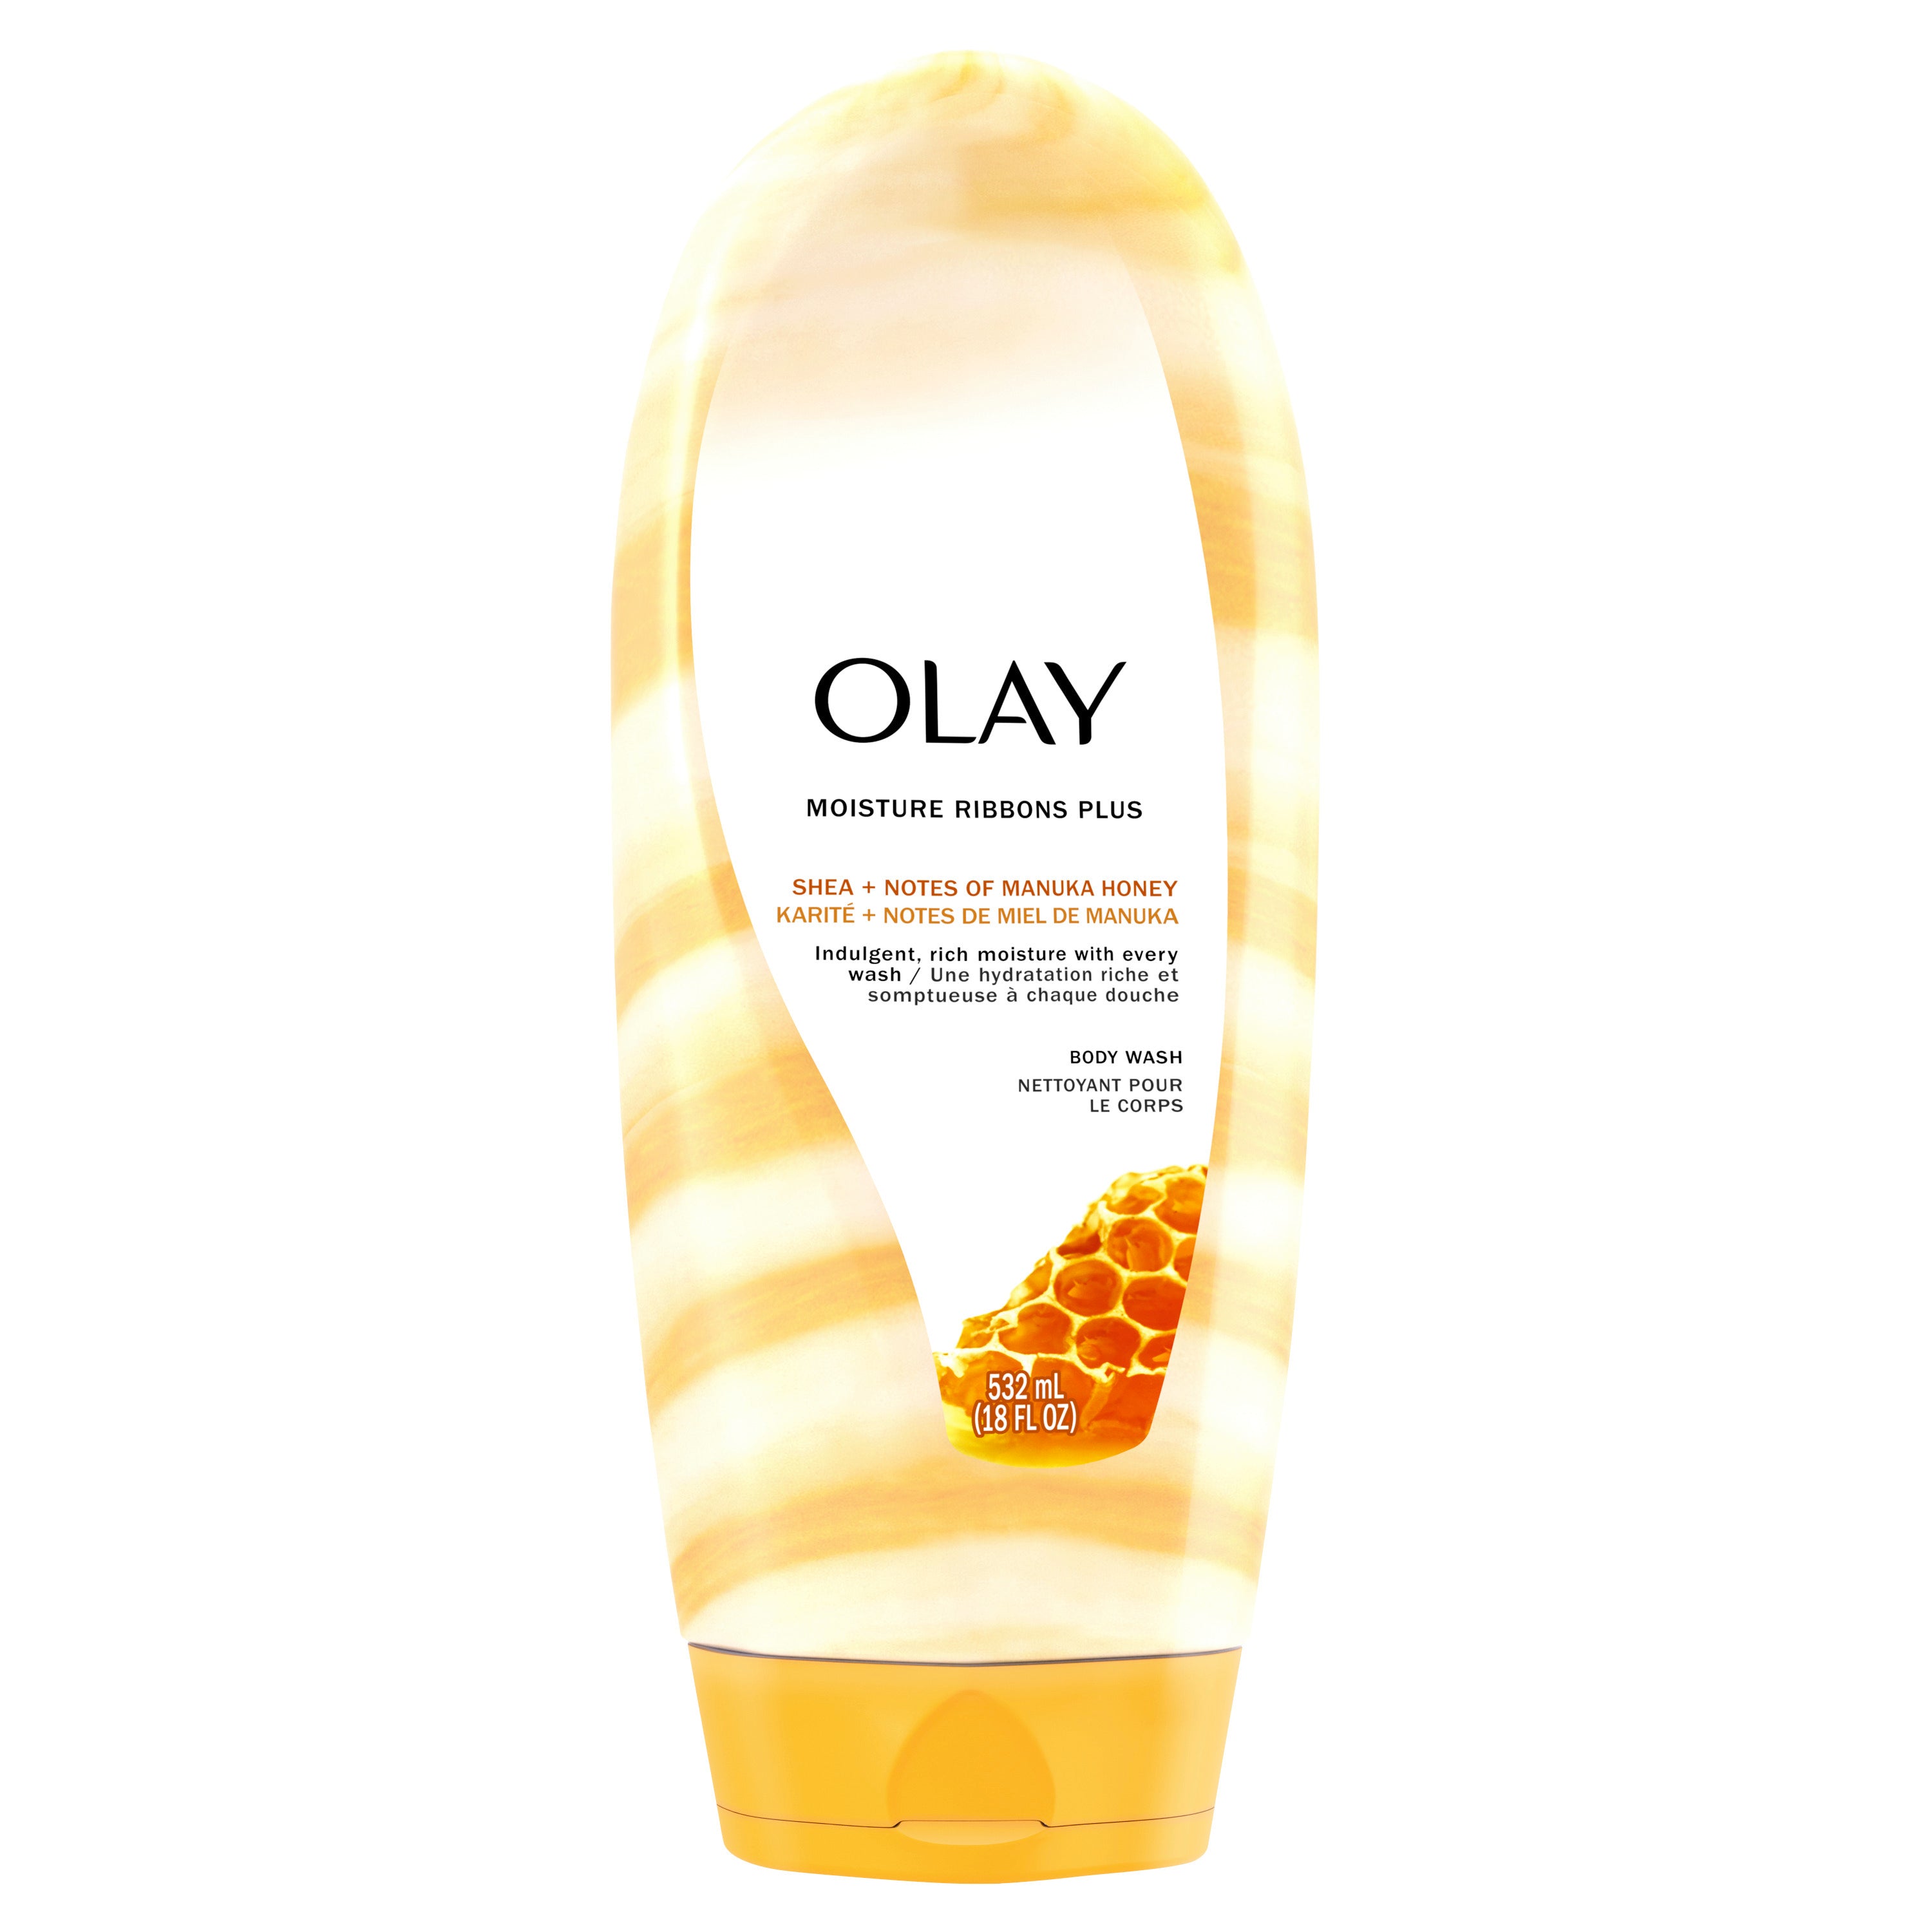 Olay Moisture Ribbons Plus Shea and Manuka Honey Body Wash, for All Skin Types, 18 fl oz | MTTS303